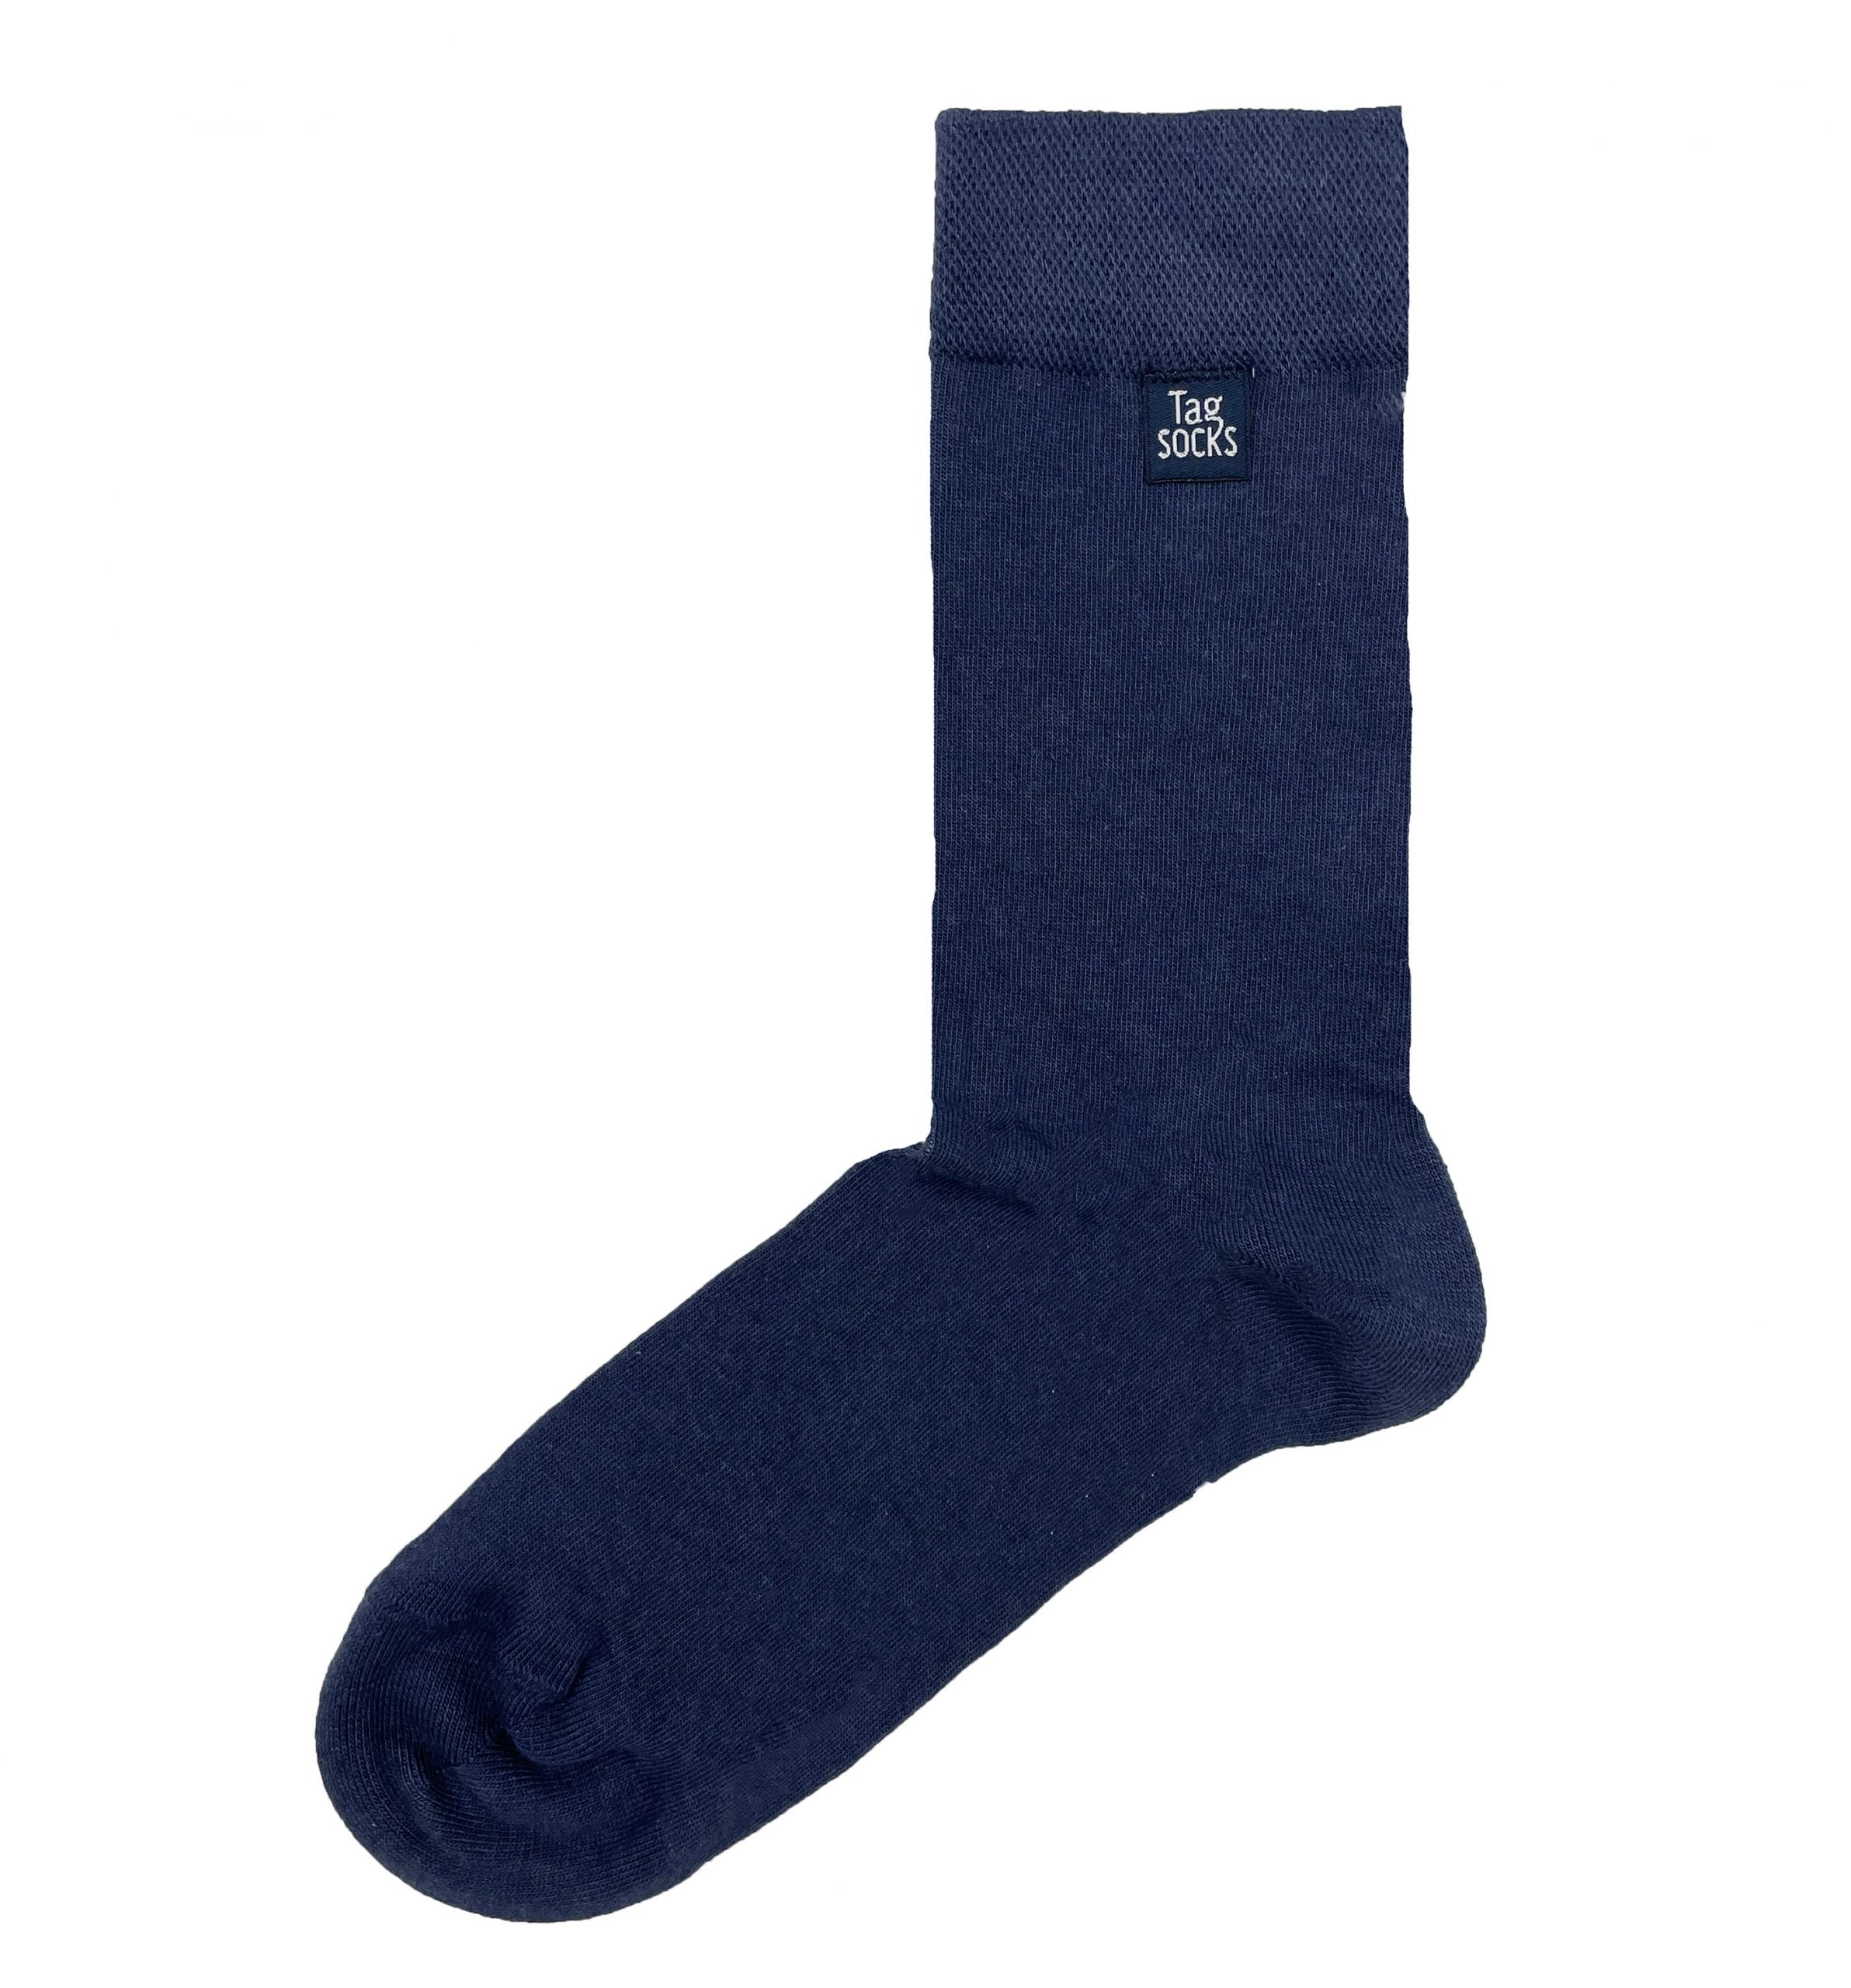 Blue bamboo sock from Tag Socks